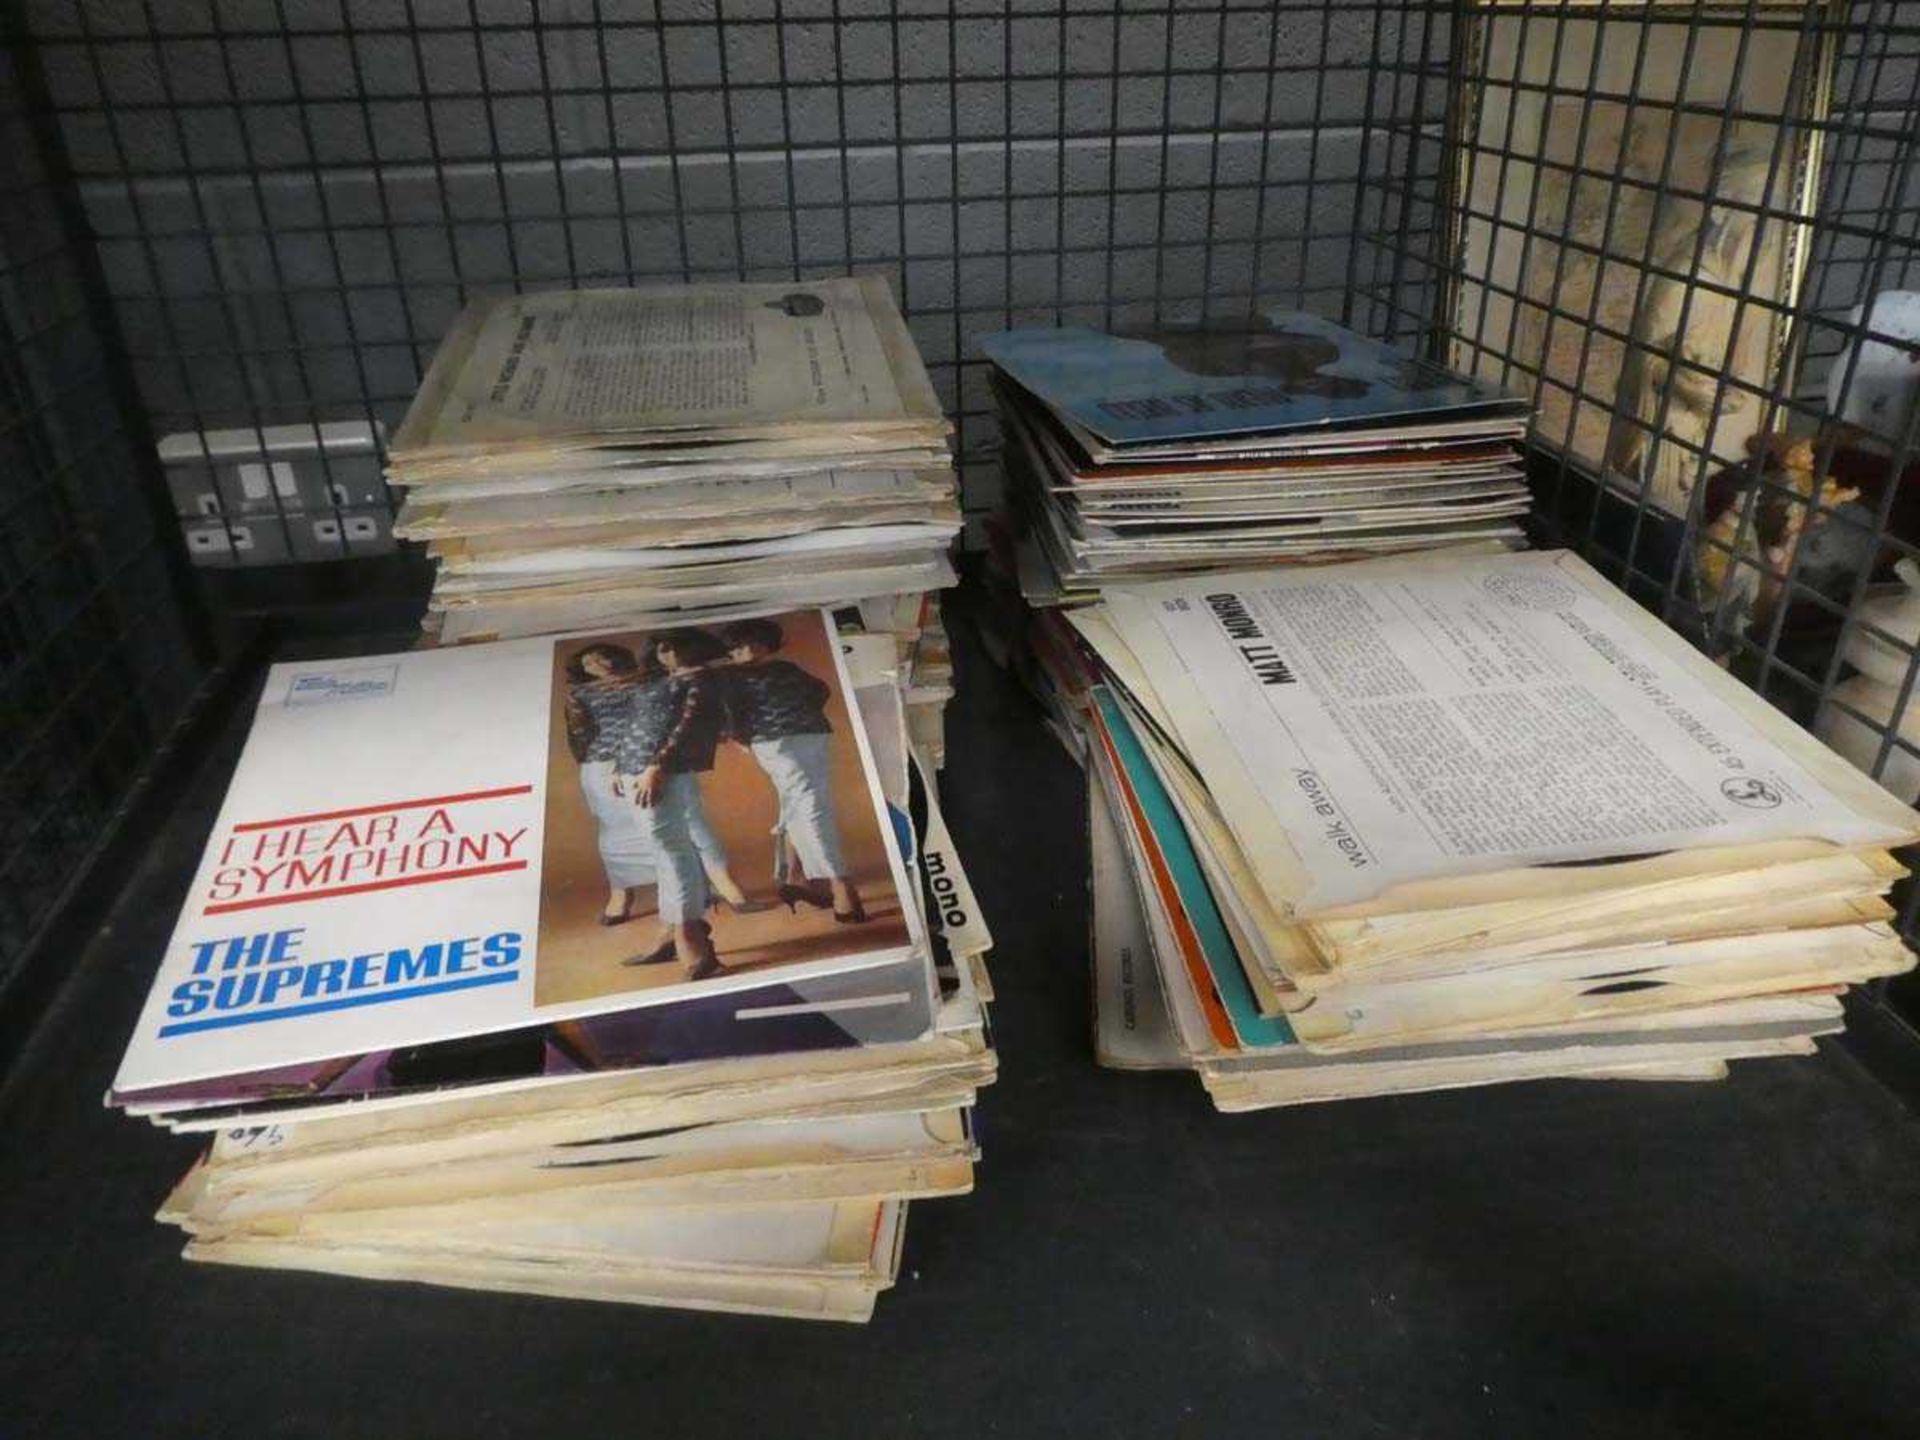 Cage containing quantity of EP vinyl records